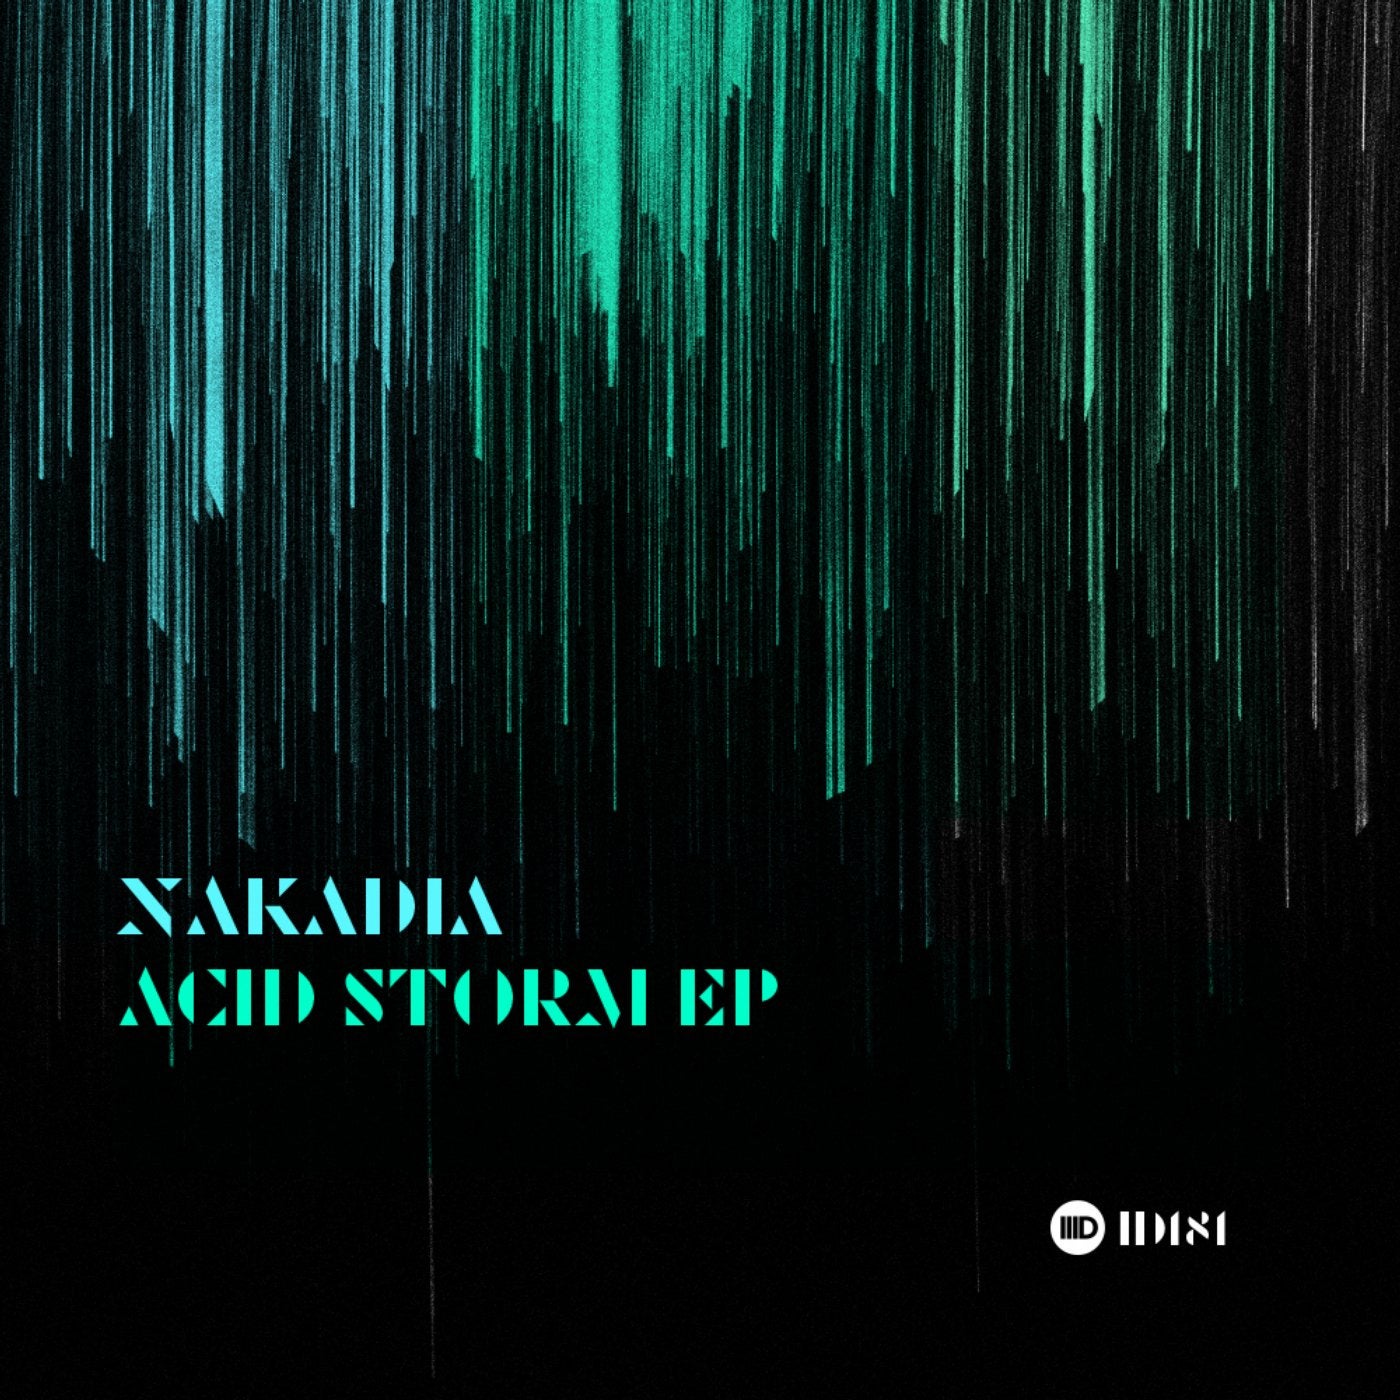 Acid Storm EP